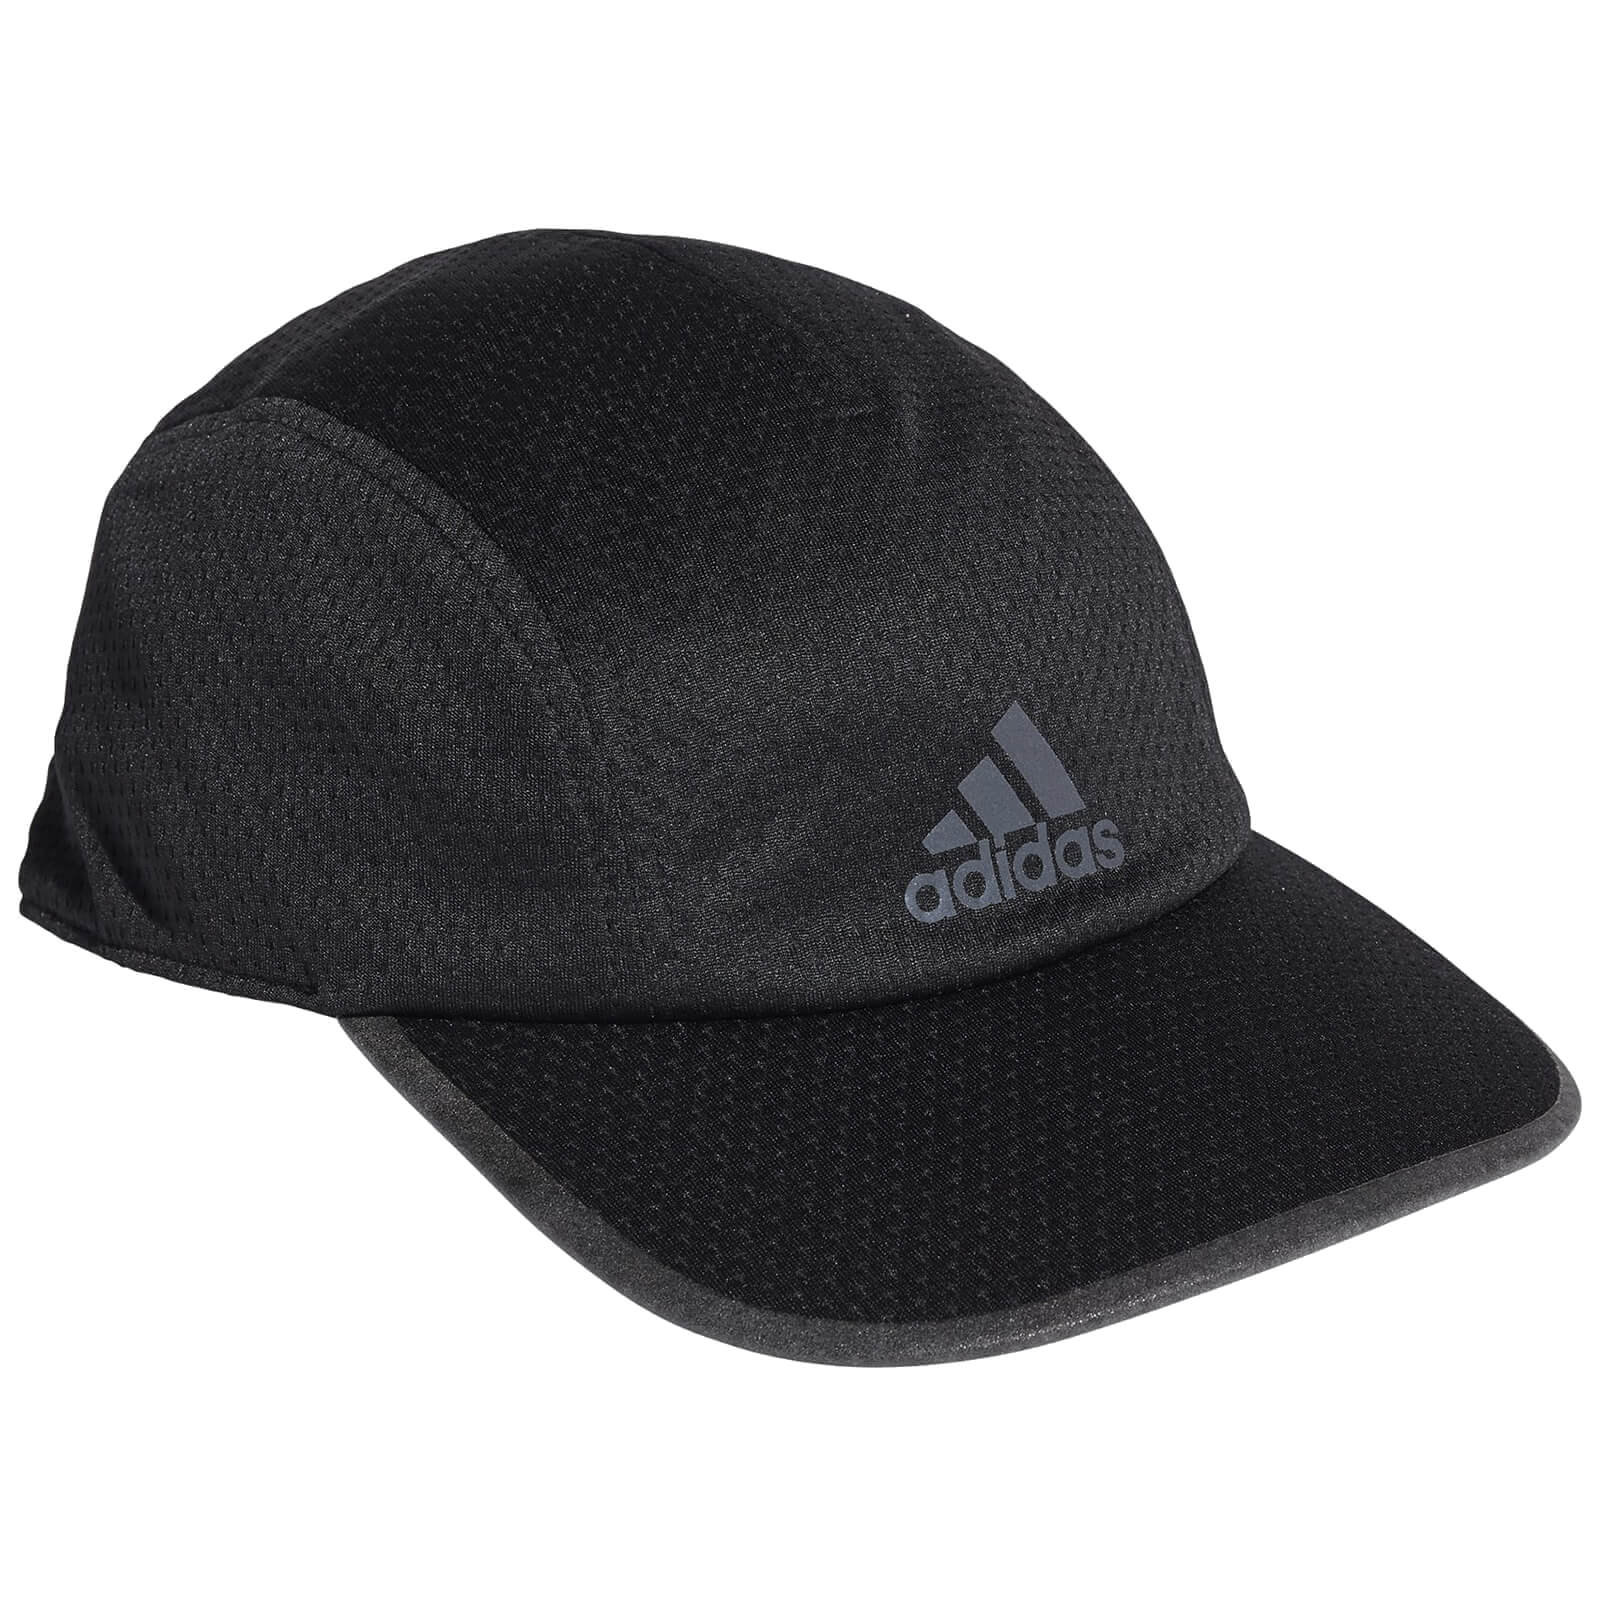 Adidas Running Mesh Aeroready Cap - Black/Black/Black - OSFM